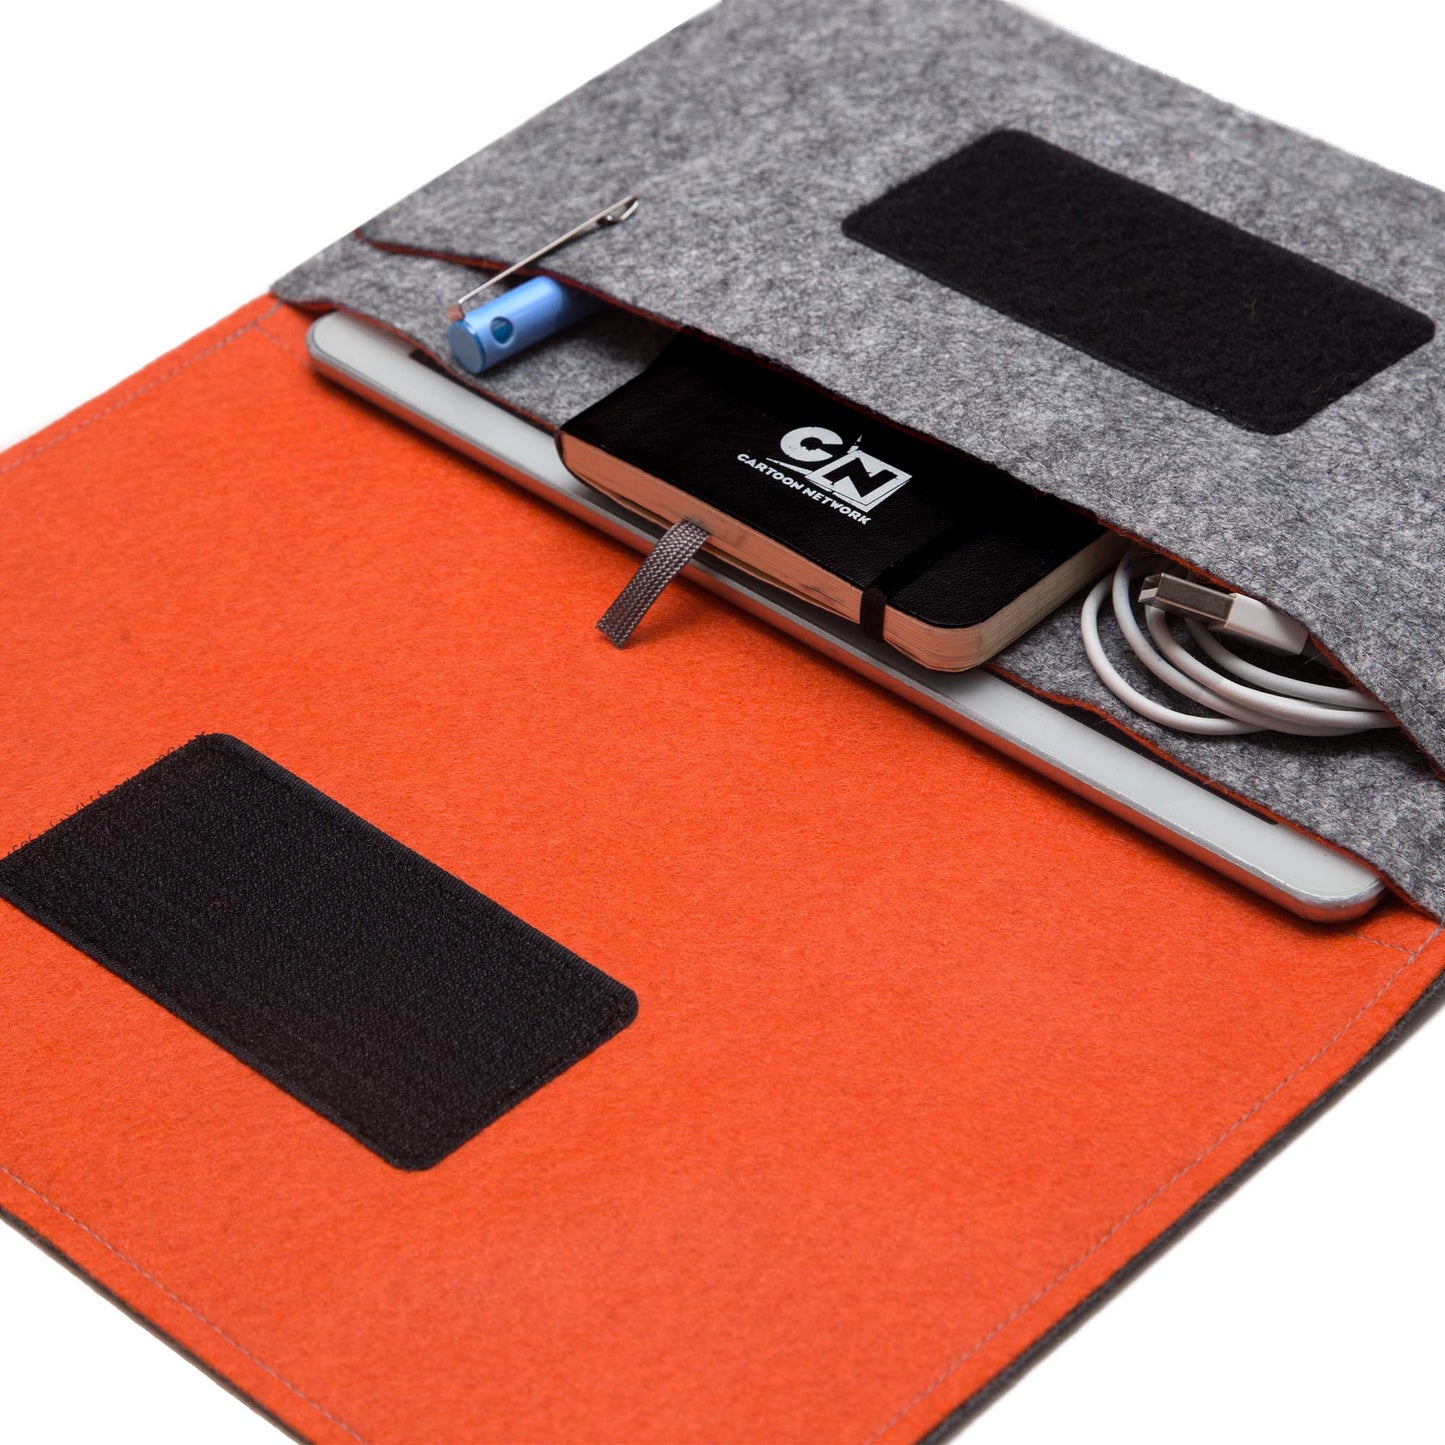 Premium Felt iPad Cover: Ultimate Protection with Accessories Pocket - Grey & Orange